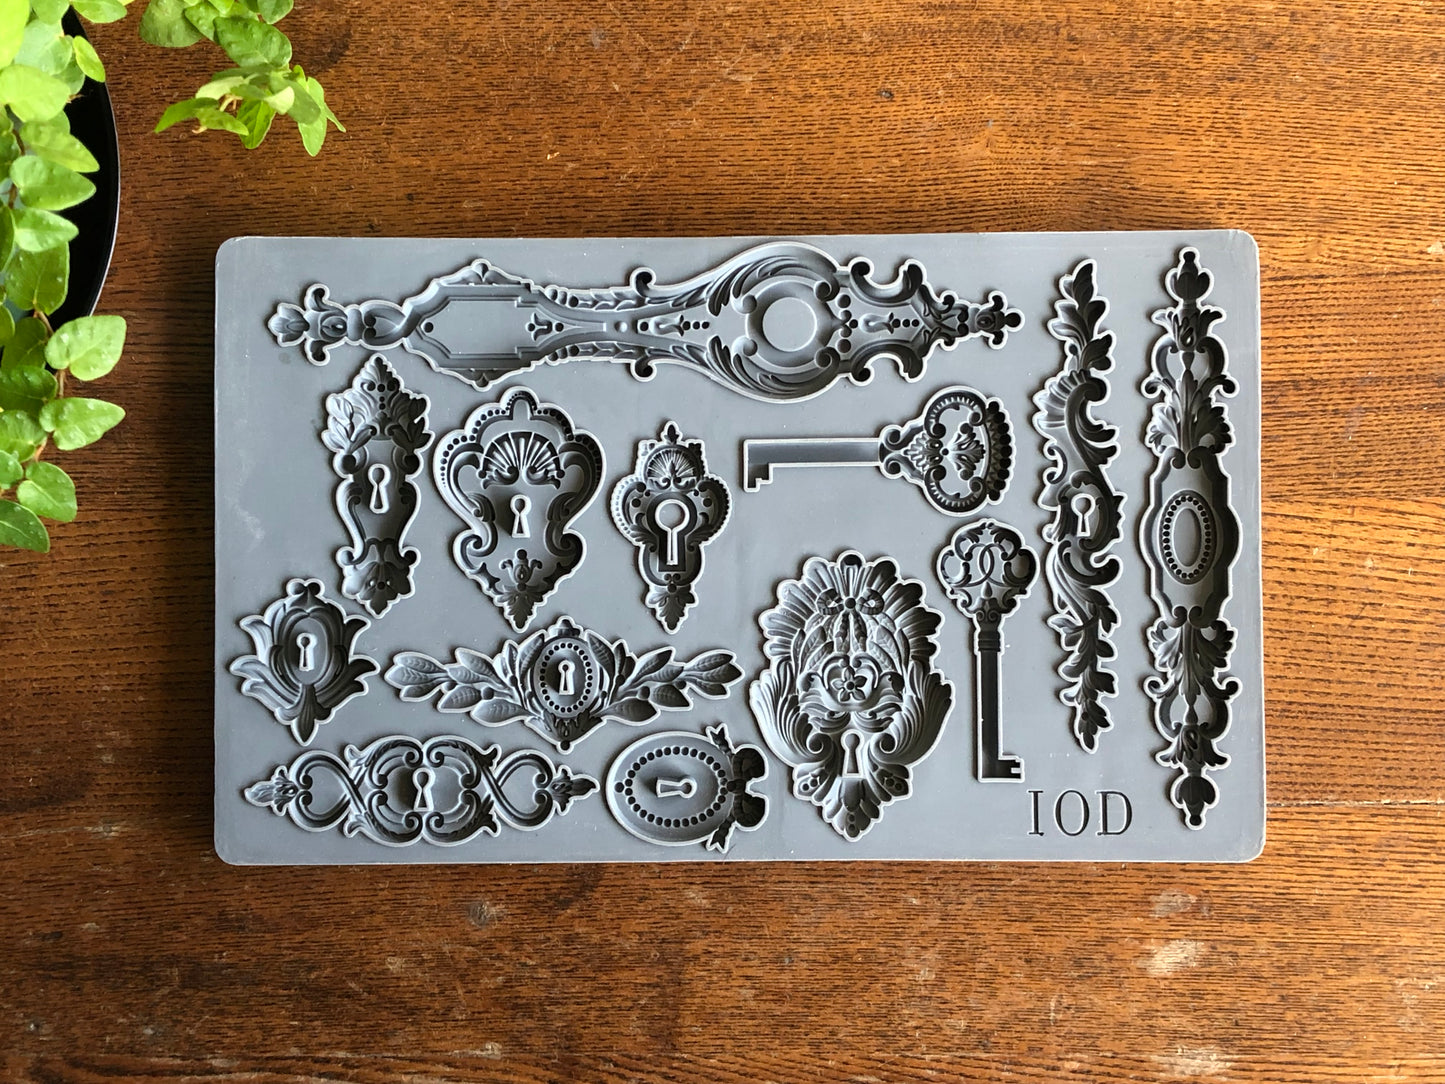 Iron Orchid Designs Lock & Key | IOD Mould